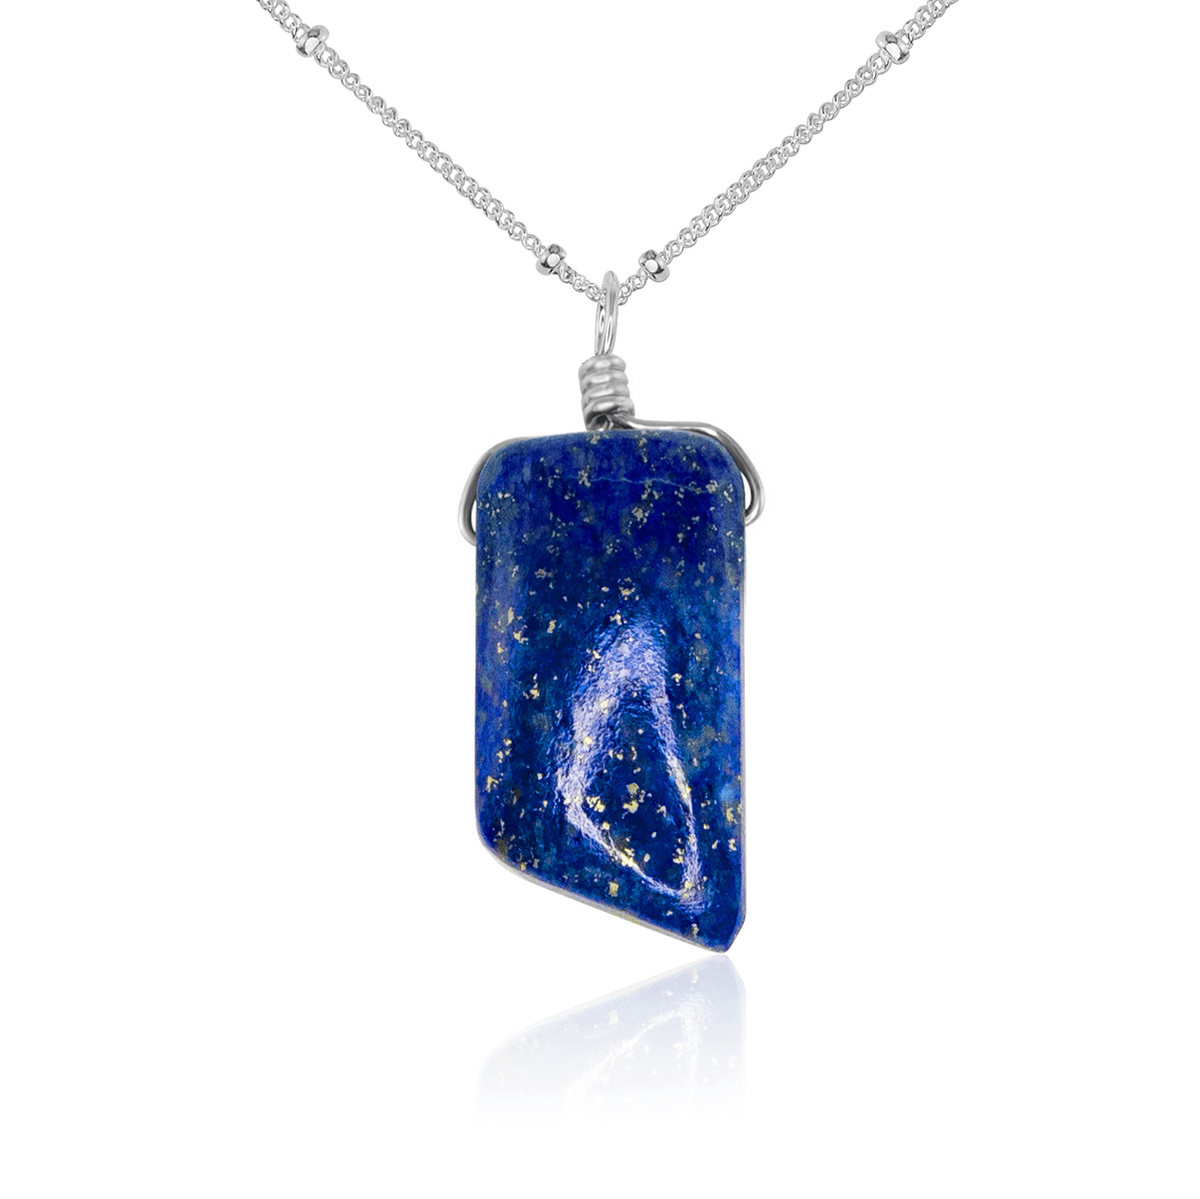 Small Smooth Lapis Lazuli Gentle Point Crystal Pendant Necklace - Small Smooth Lapis Lazuli Gentle Point Crystal Pendant Necklace - Sterling Silver / Satellite - Luna Tide Handmade Crystal Jewellery